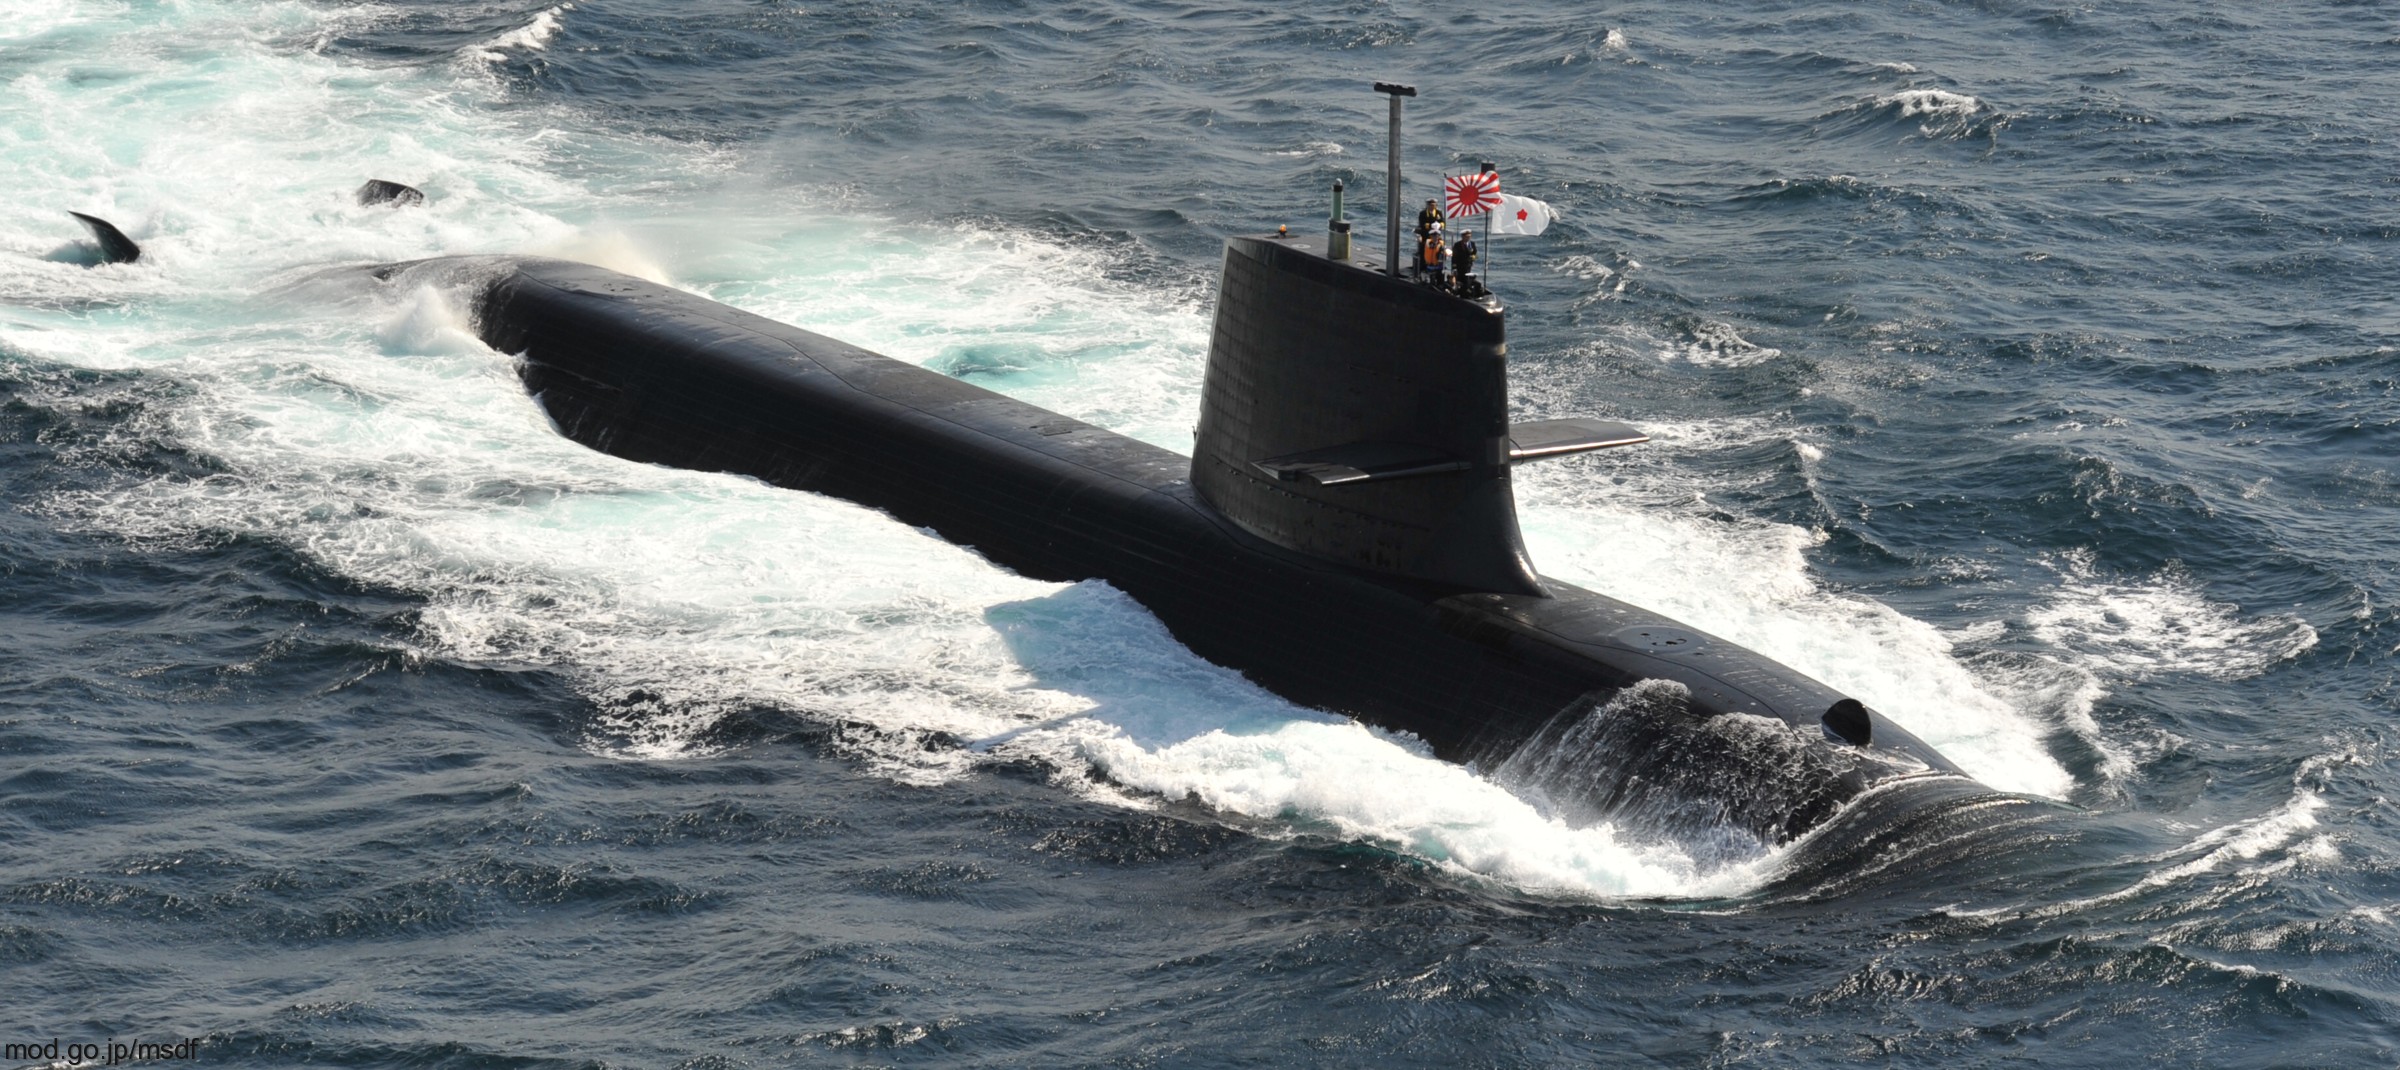 ss-504 js kenryu 16ss soryu class attack submarine ssk japan maritime self defense force jmsdf 02